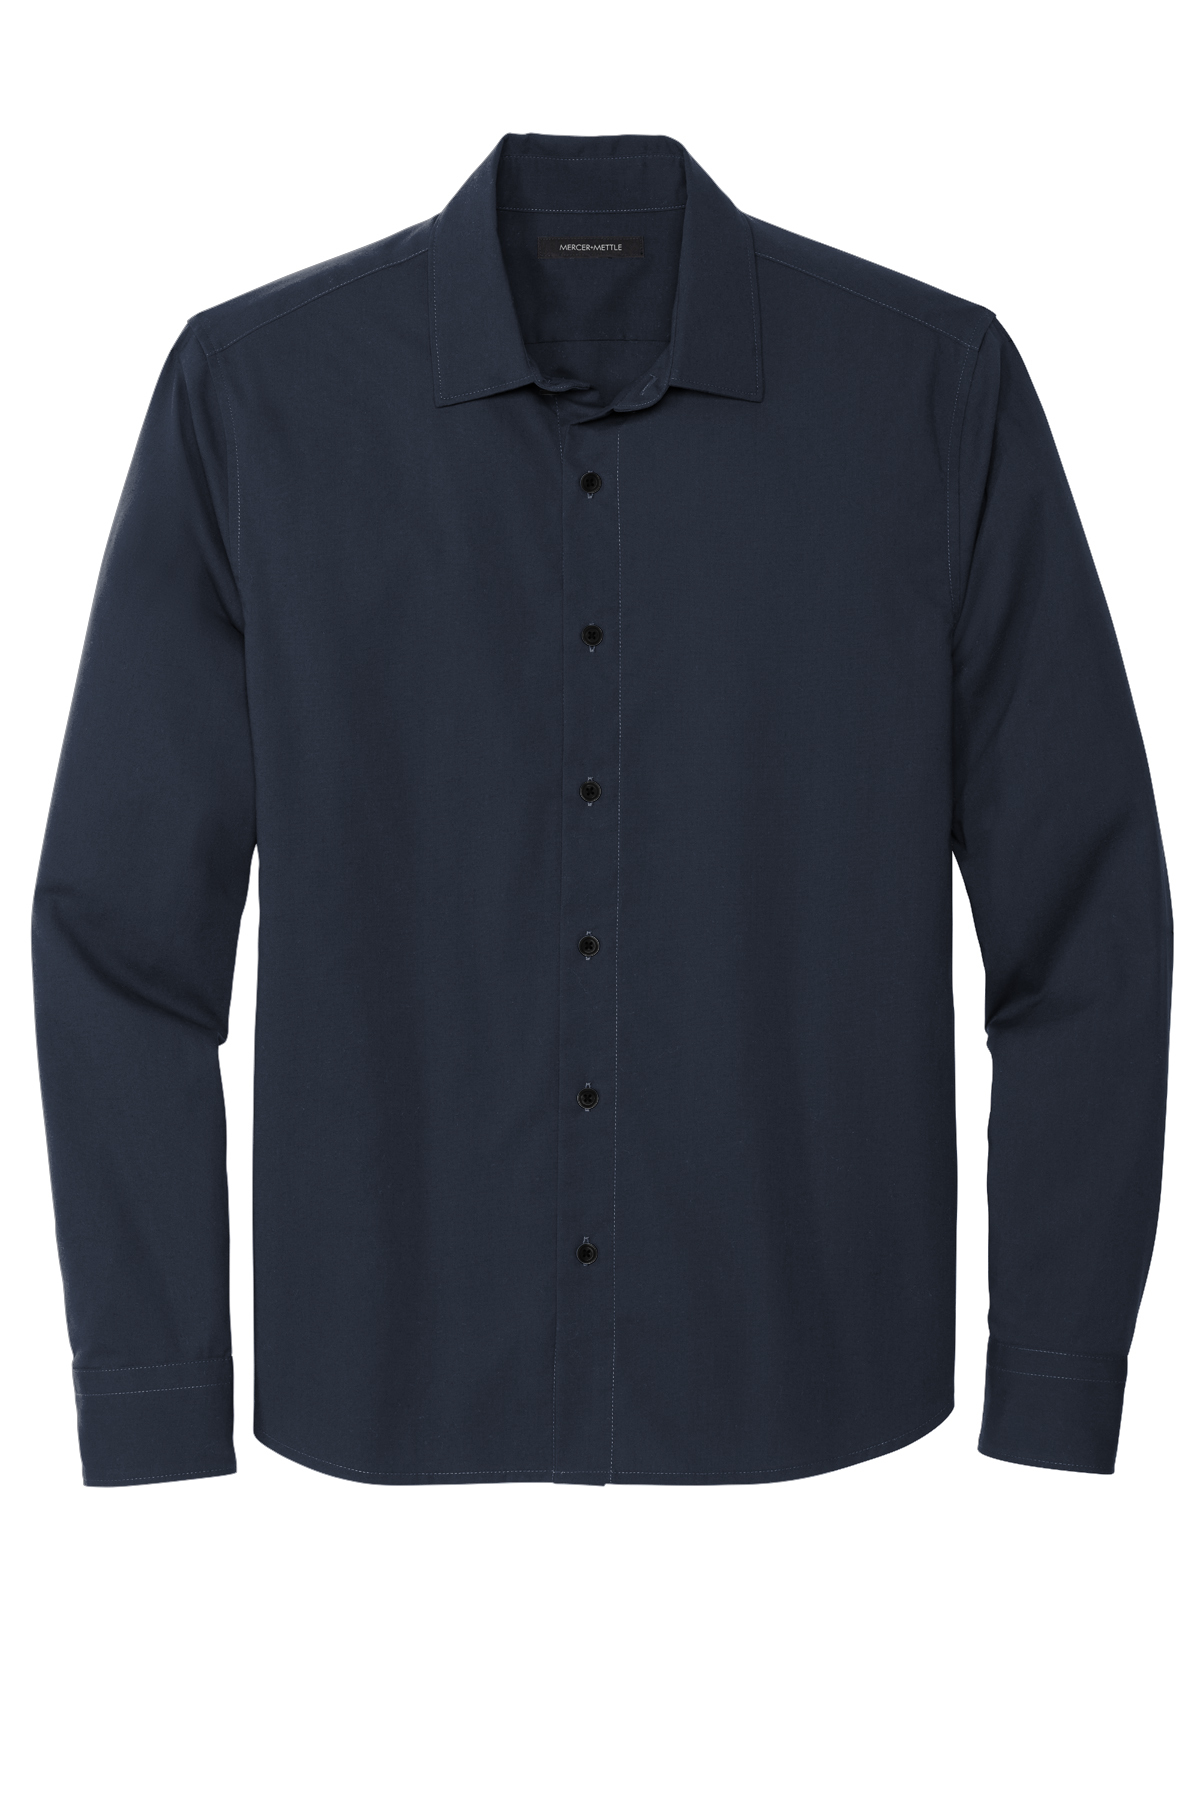 Mercer+Mettle Long Sleeve Stretch Woven Shirt | Product | SanMar